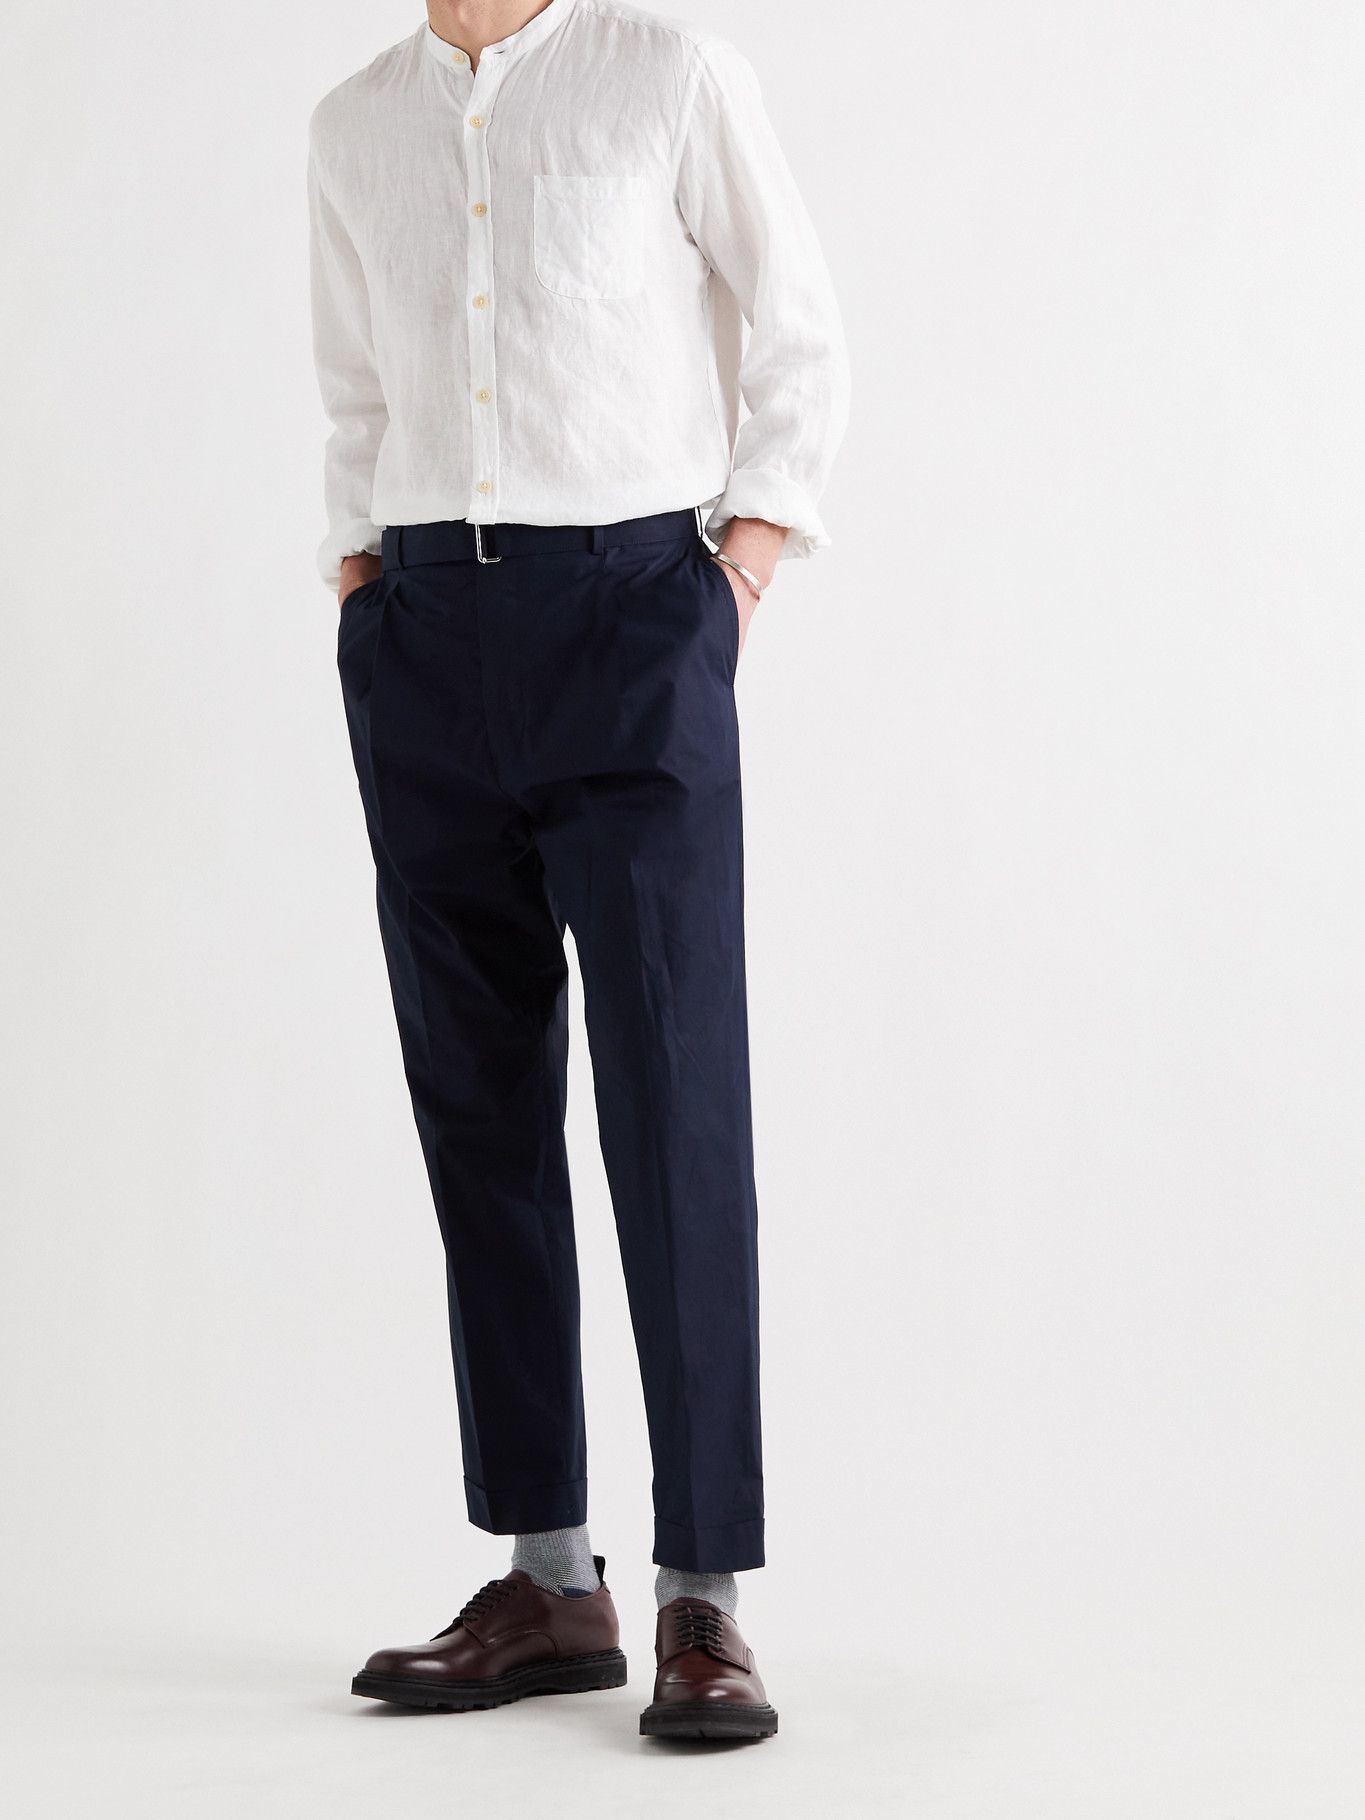 OLIVER SPENCER - Grandad-Collar Striped Cotton Shirt - White